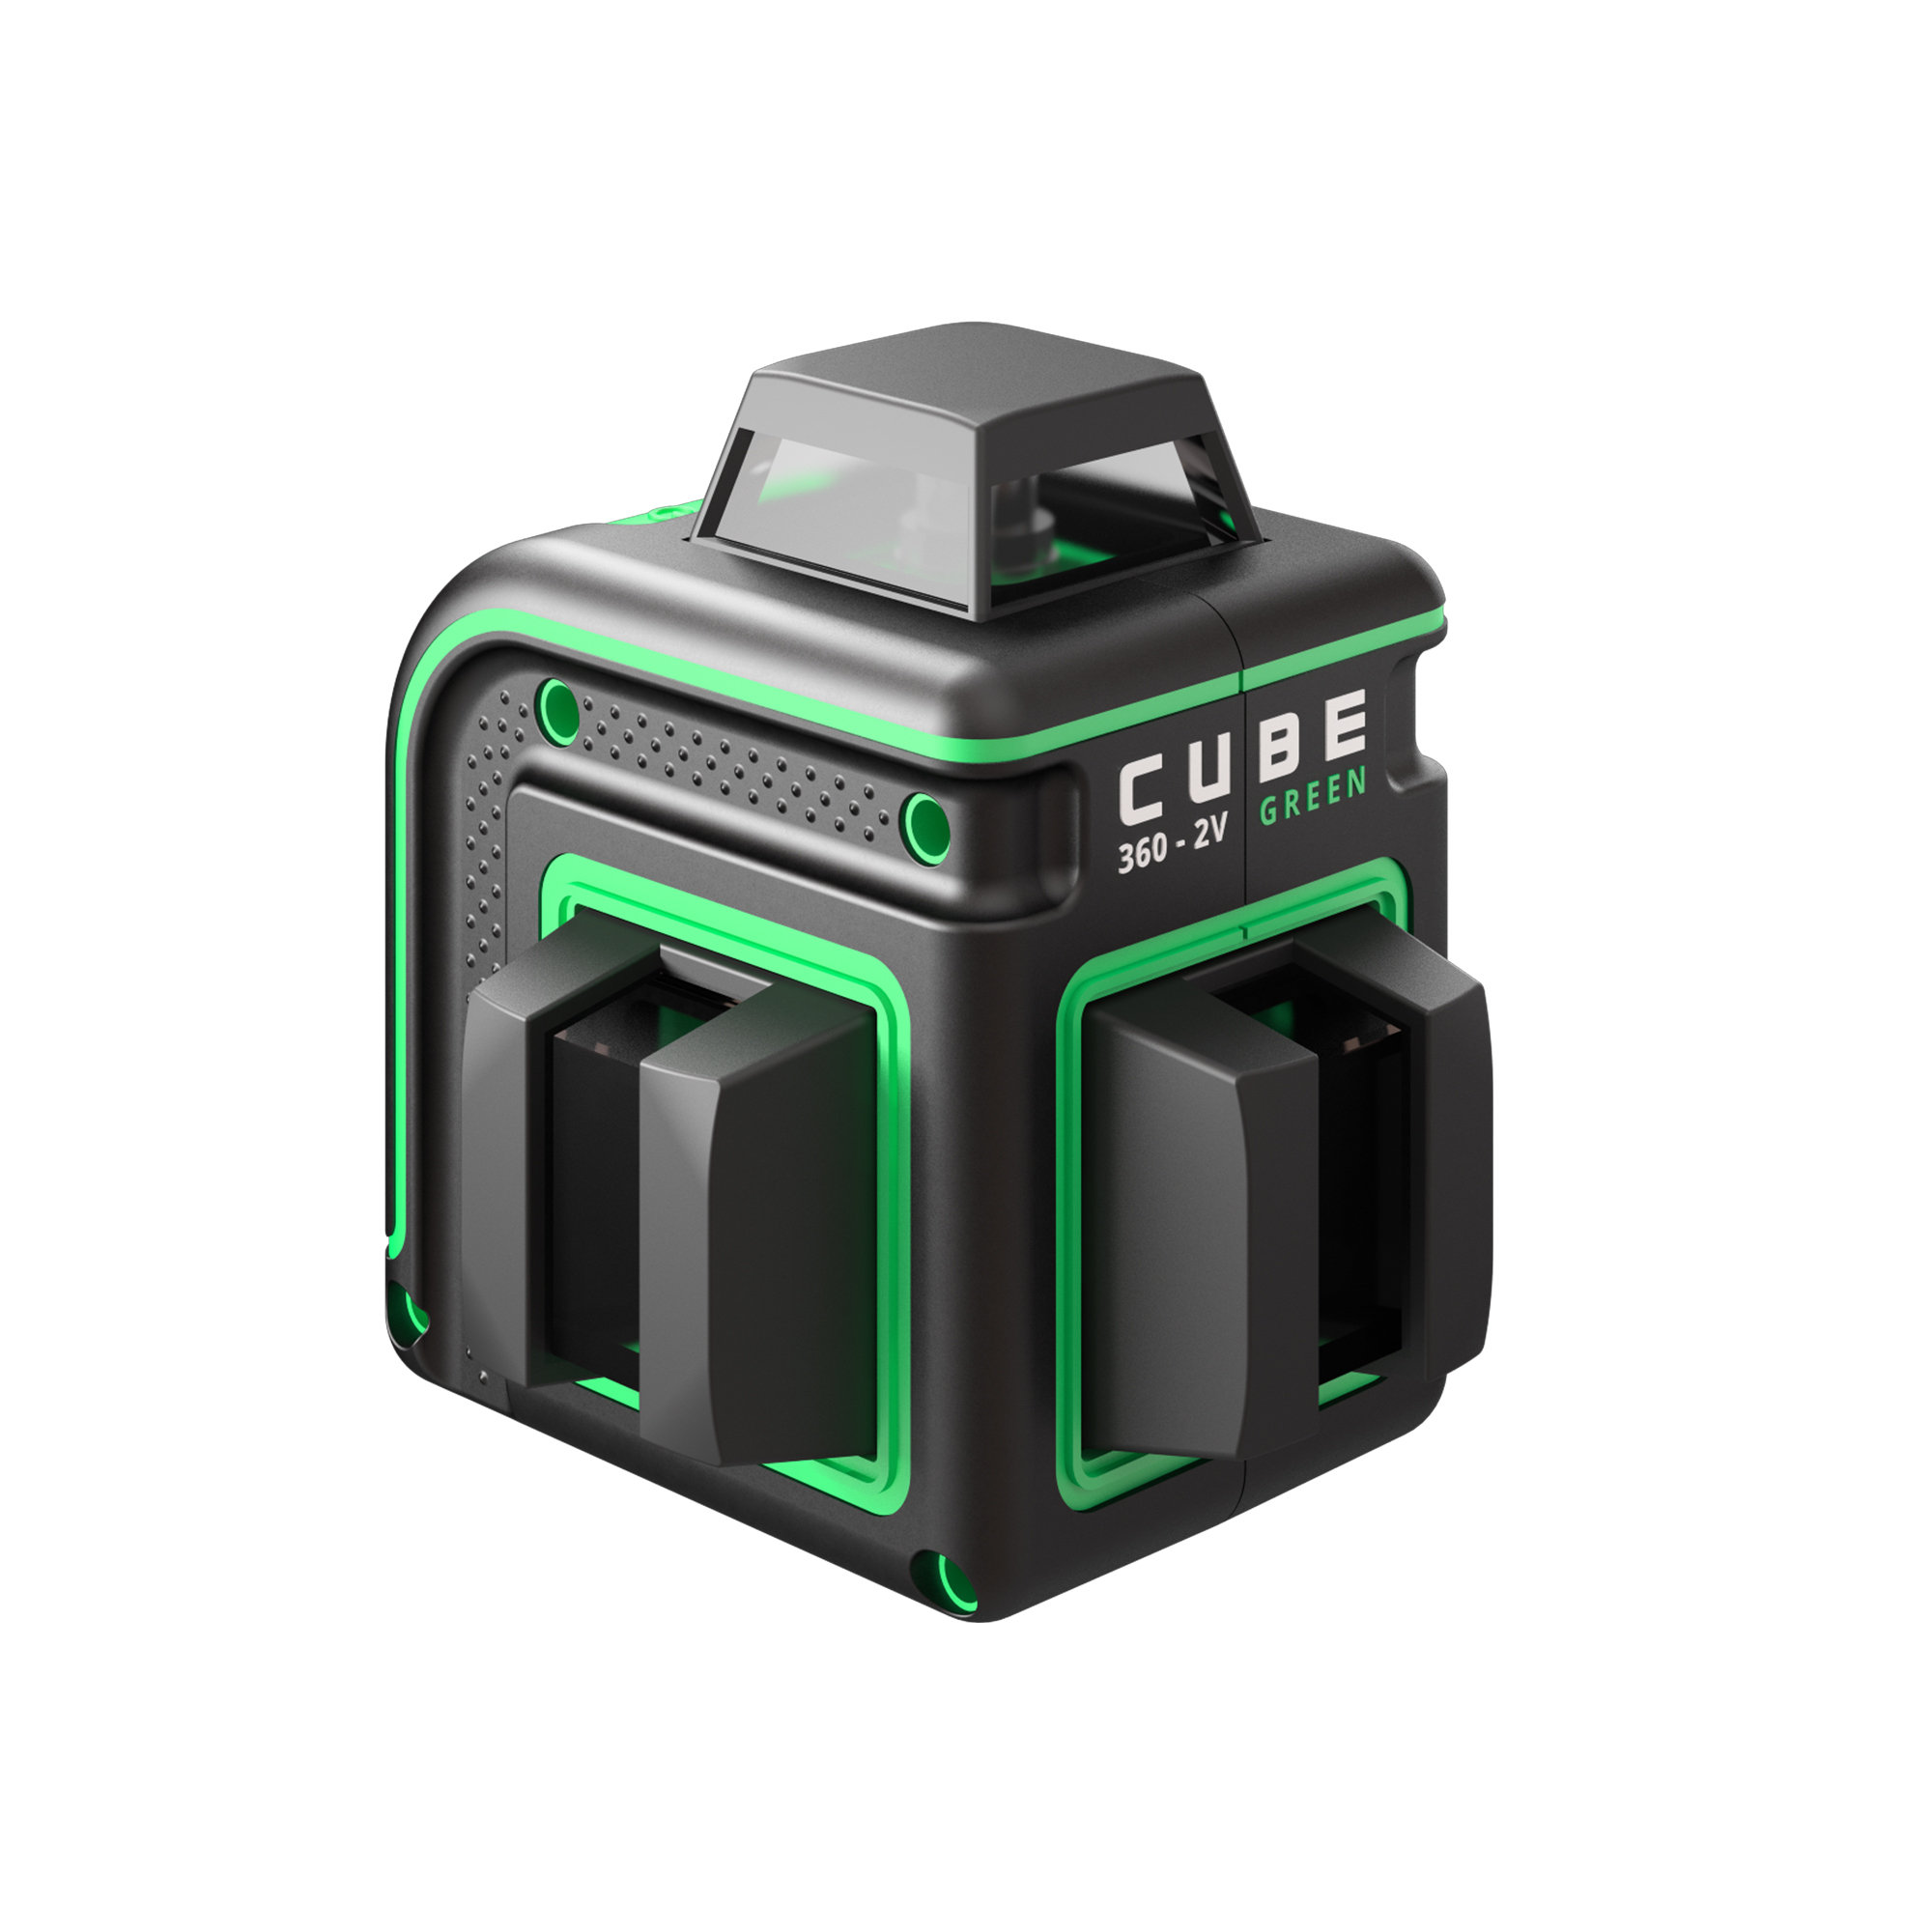 Ada cube 360 basic. Ada Cube 2-360 Green professional Edition а00534. Нивелир лазерный ada Cube 360 professional Edition. Лазерный нивелир ada Cube 3-360 Green Ultimate Edition а00569. Ada Cube 3-360 professional Edition а00572.